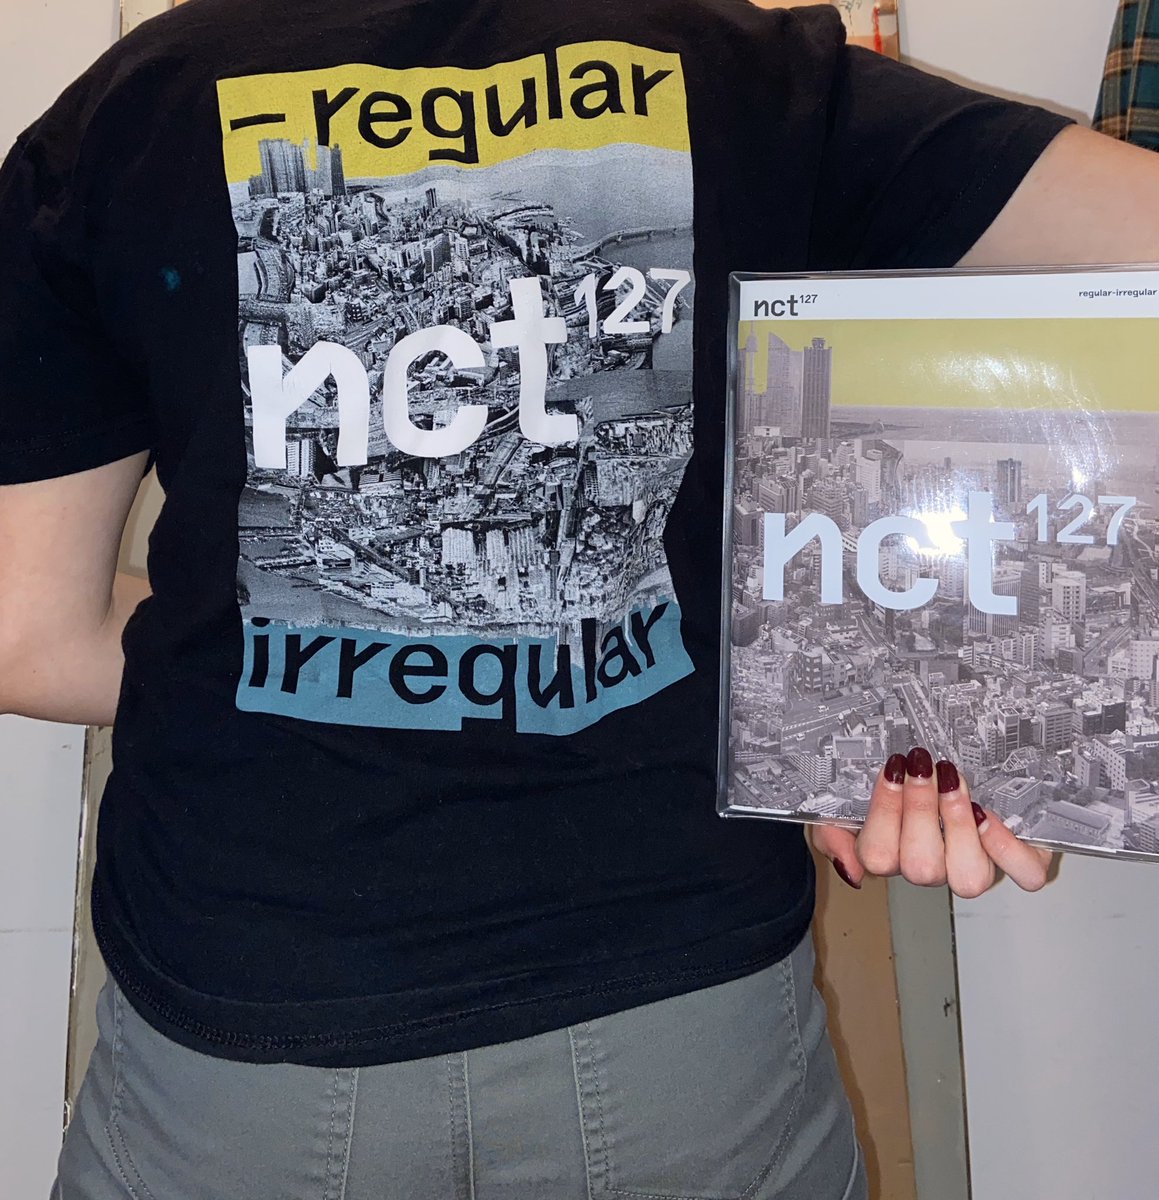 NCT 127-Regular / Irregular